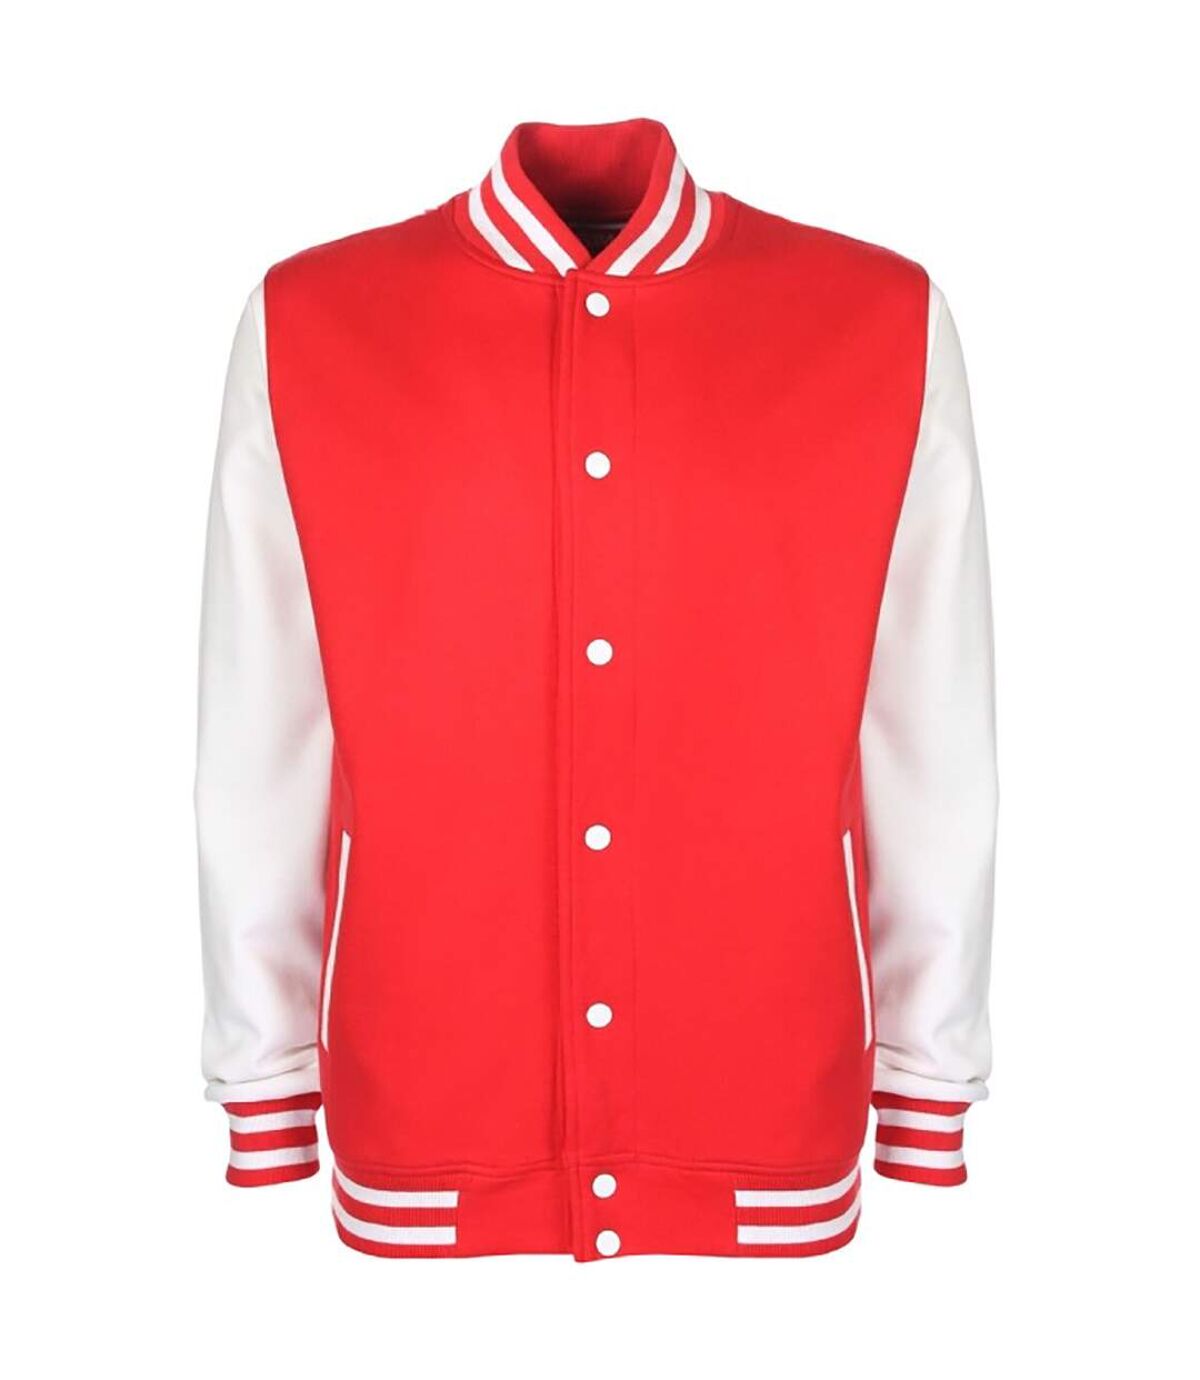 FDM Unisex Varsity / University Jacket (Contrast Sleeves) (Fire Red/White)